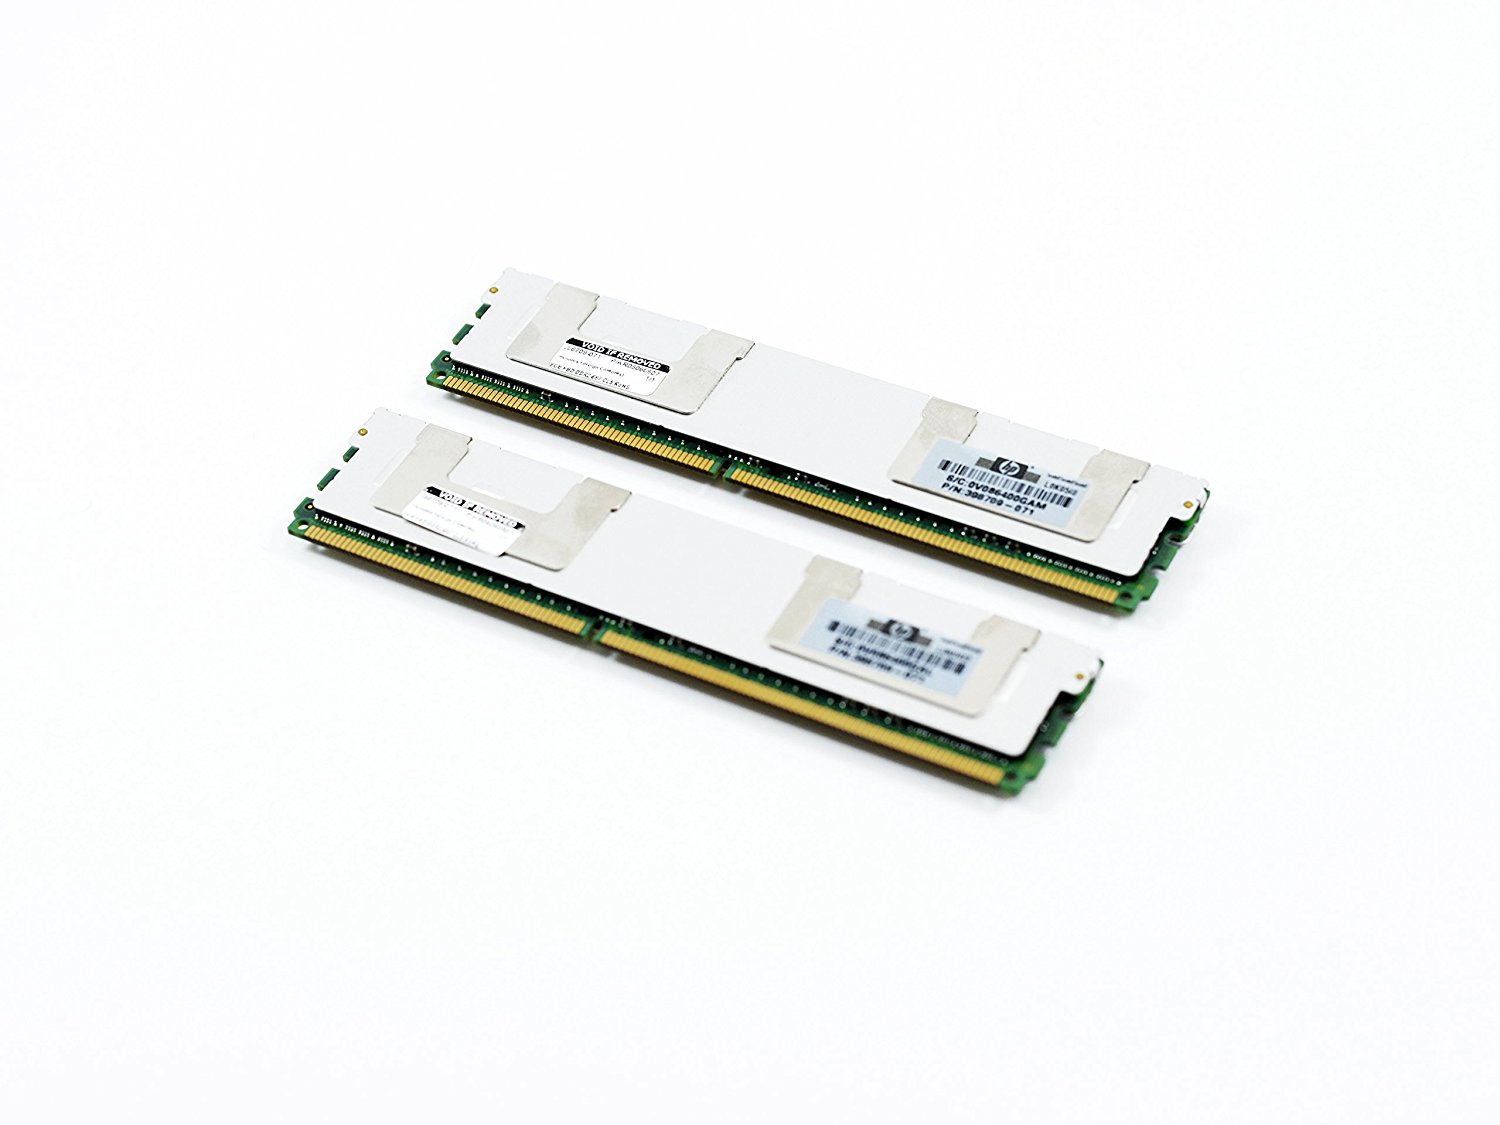 HP 16GB (2x8GB) PC2-5300 DDR2-667 2Rx4 ECC FULLY BUFFERED FBDIMM MEMORY KIT 413015-B21